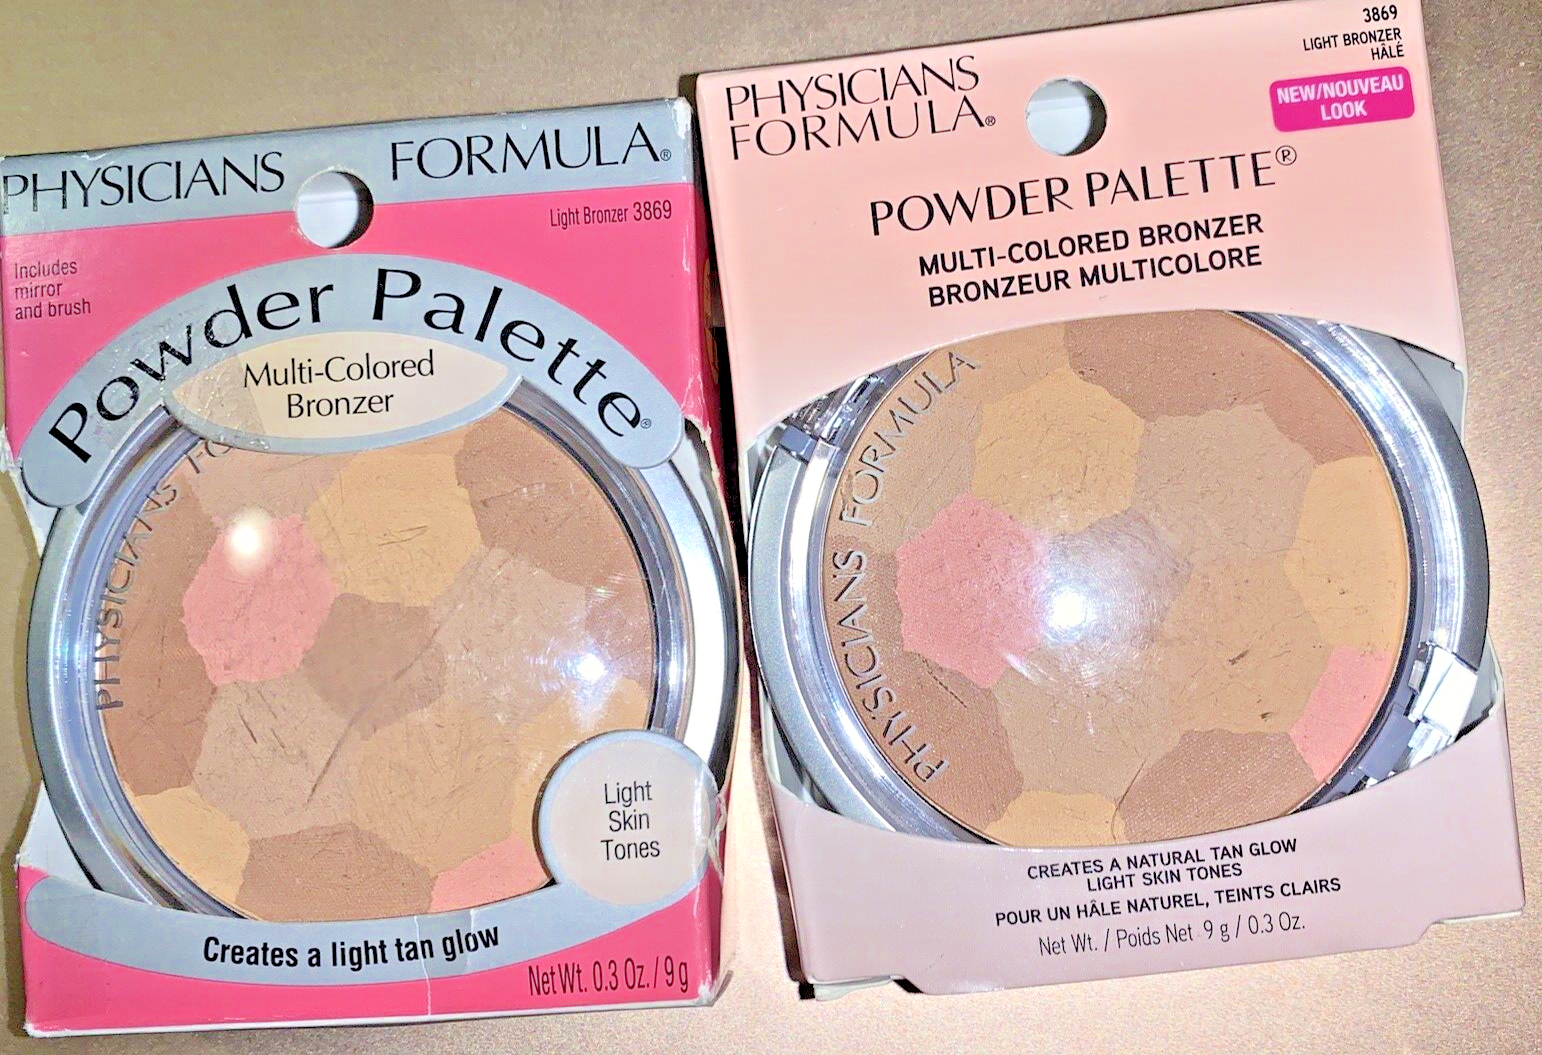 Physicians Formula Powder Palette Color Corrective Powder * 3869 * Light Bronzer - $16.14